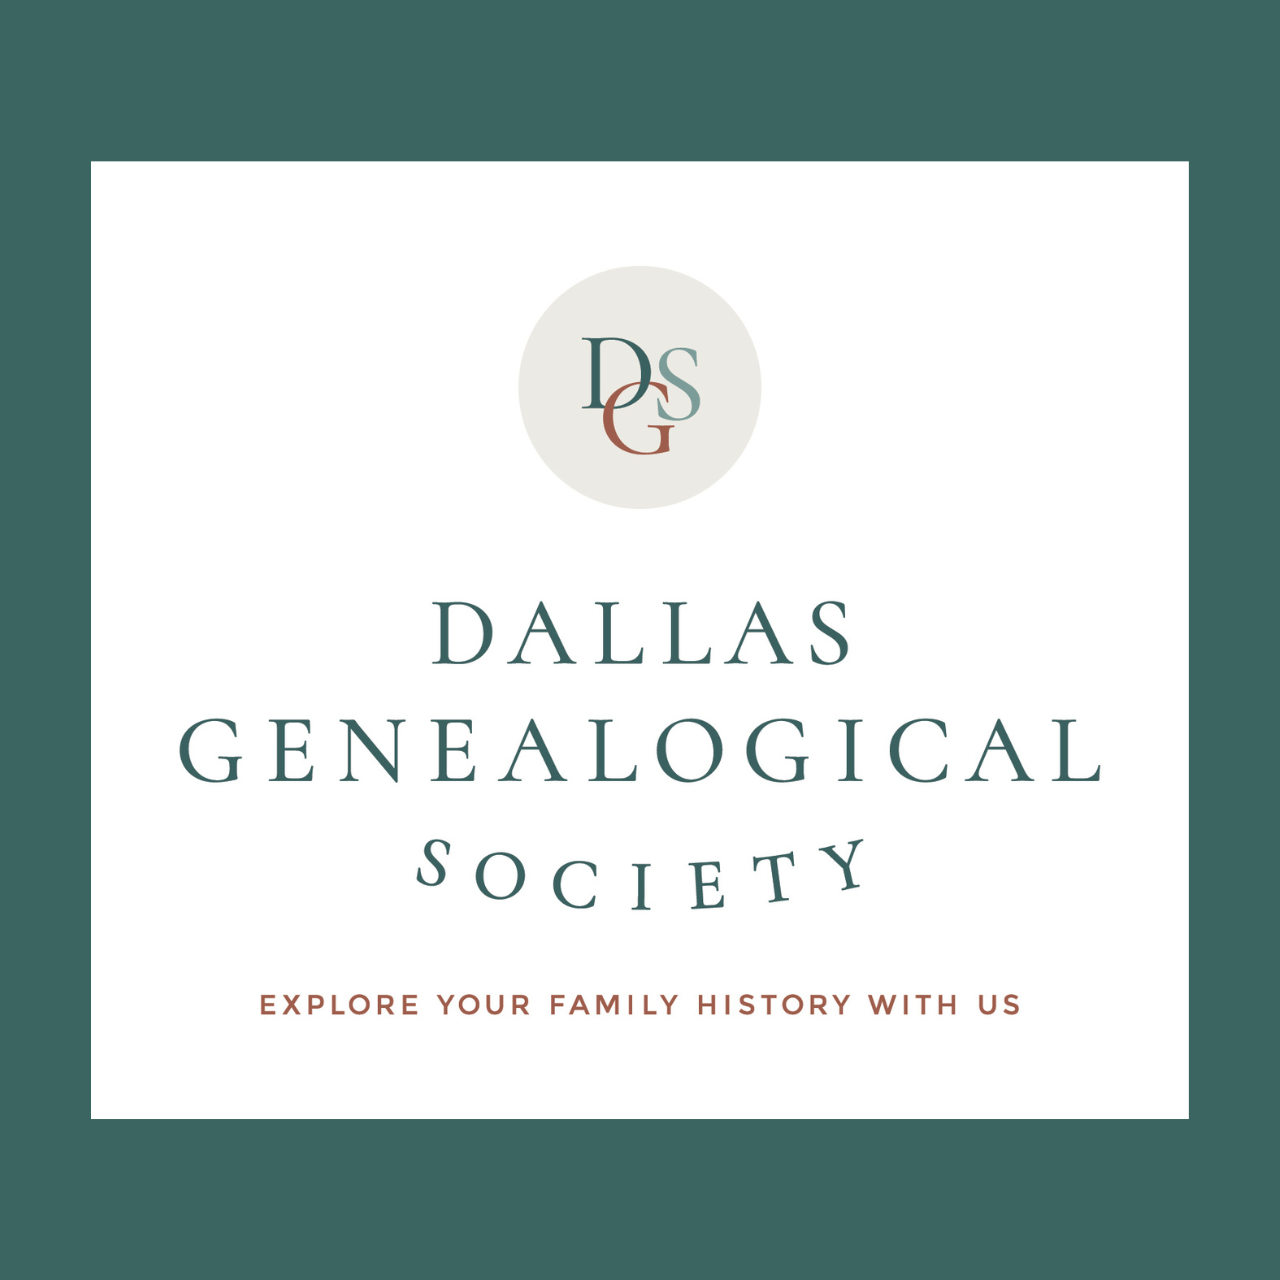 Dallas Genealogical Society Logo over green background